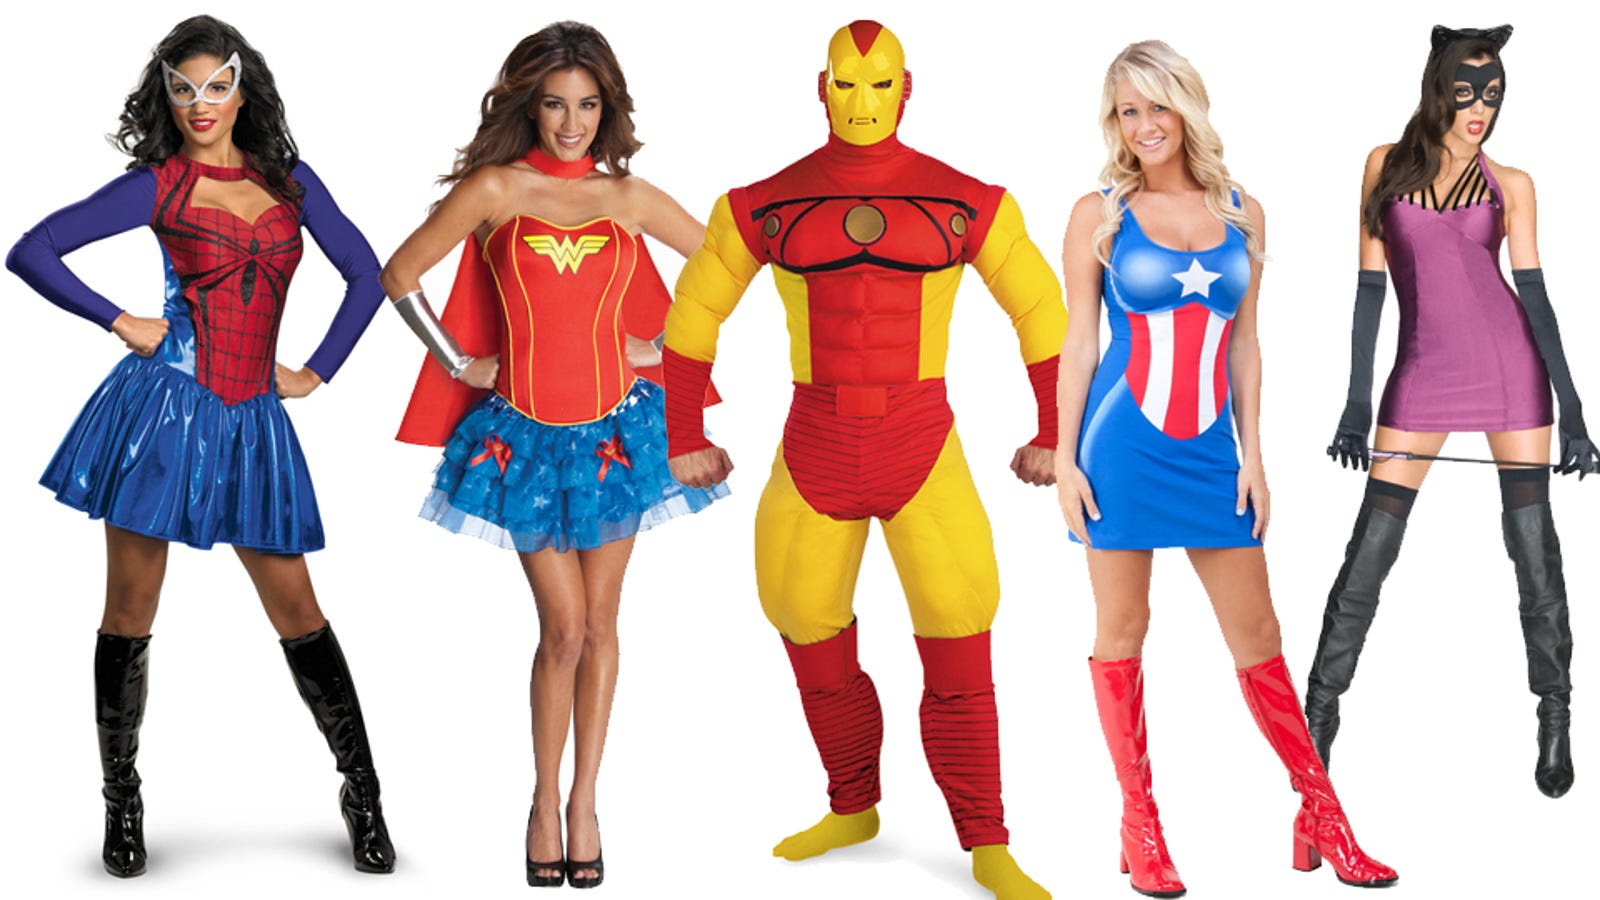 Sluttiest And Weirdest Store Bought Halloween Costumes For 2012 7284